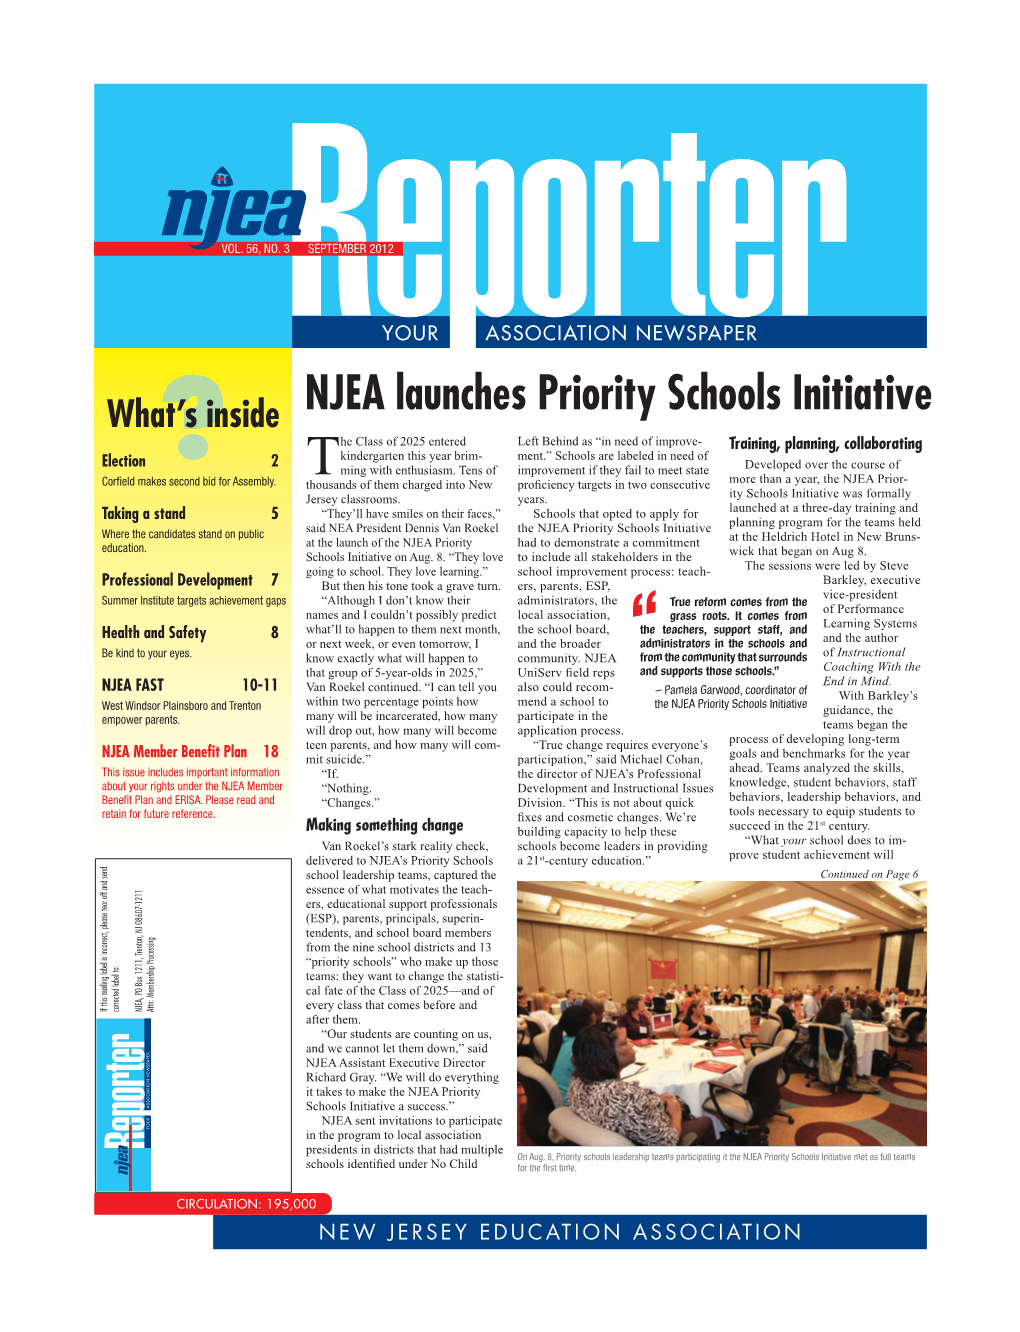 NJEA Launches Priority Schools Initiative